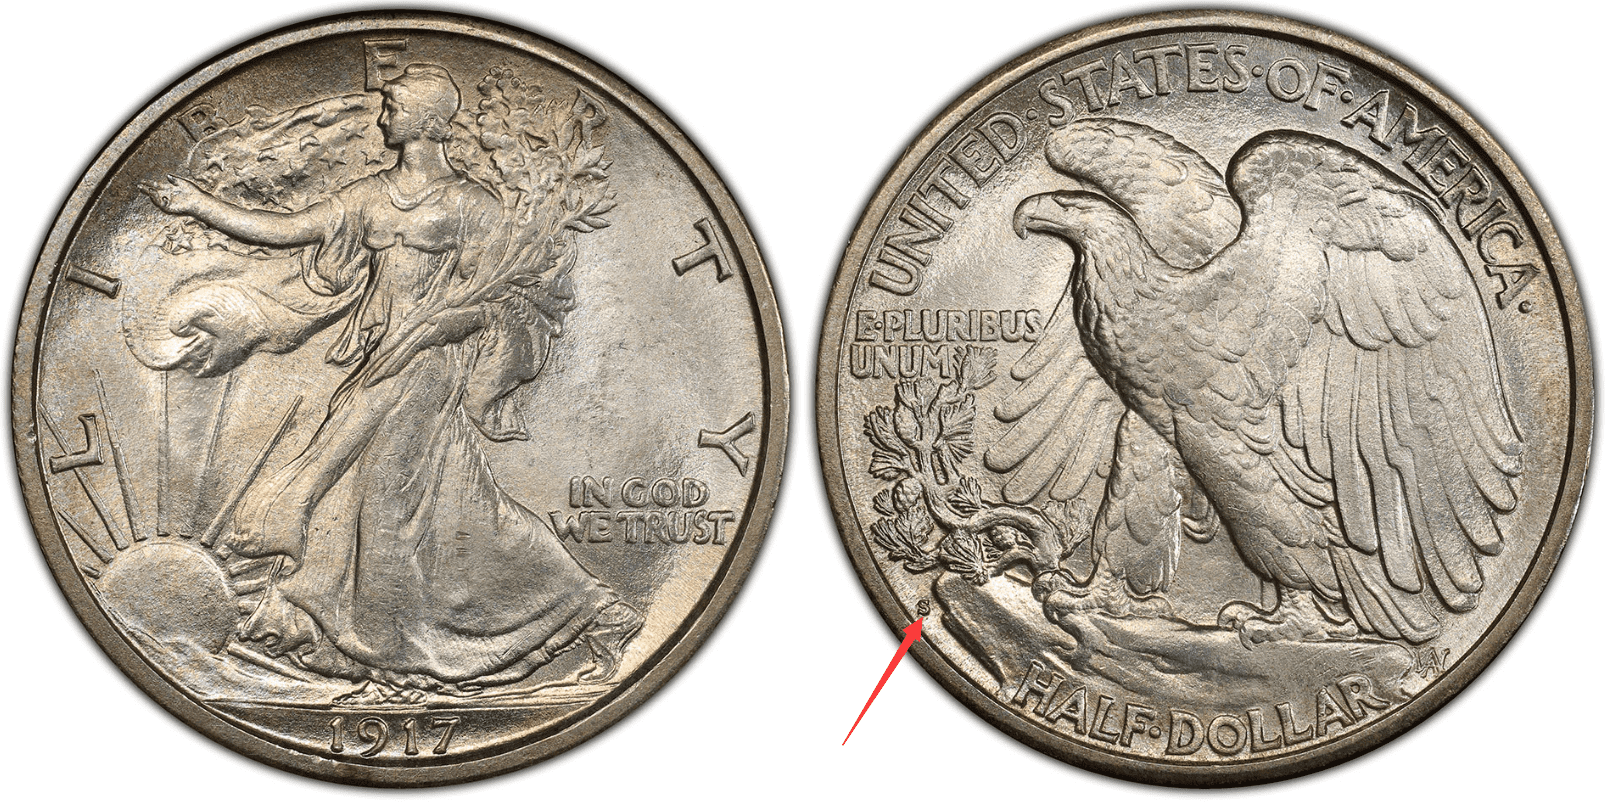 1917 S half-dollar, mint mark on the reverse